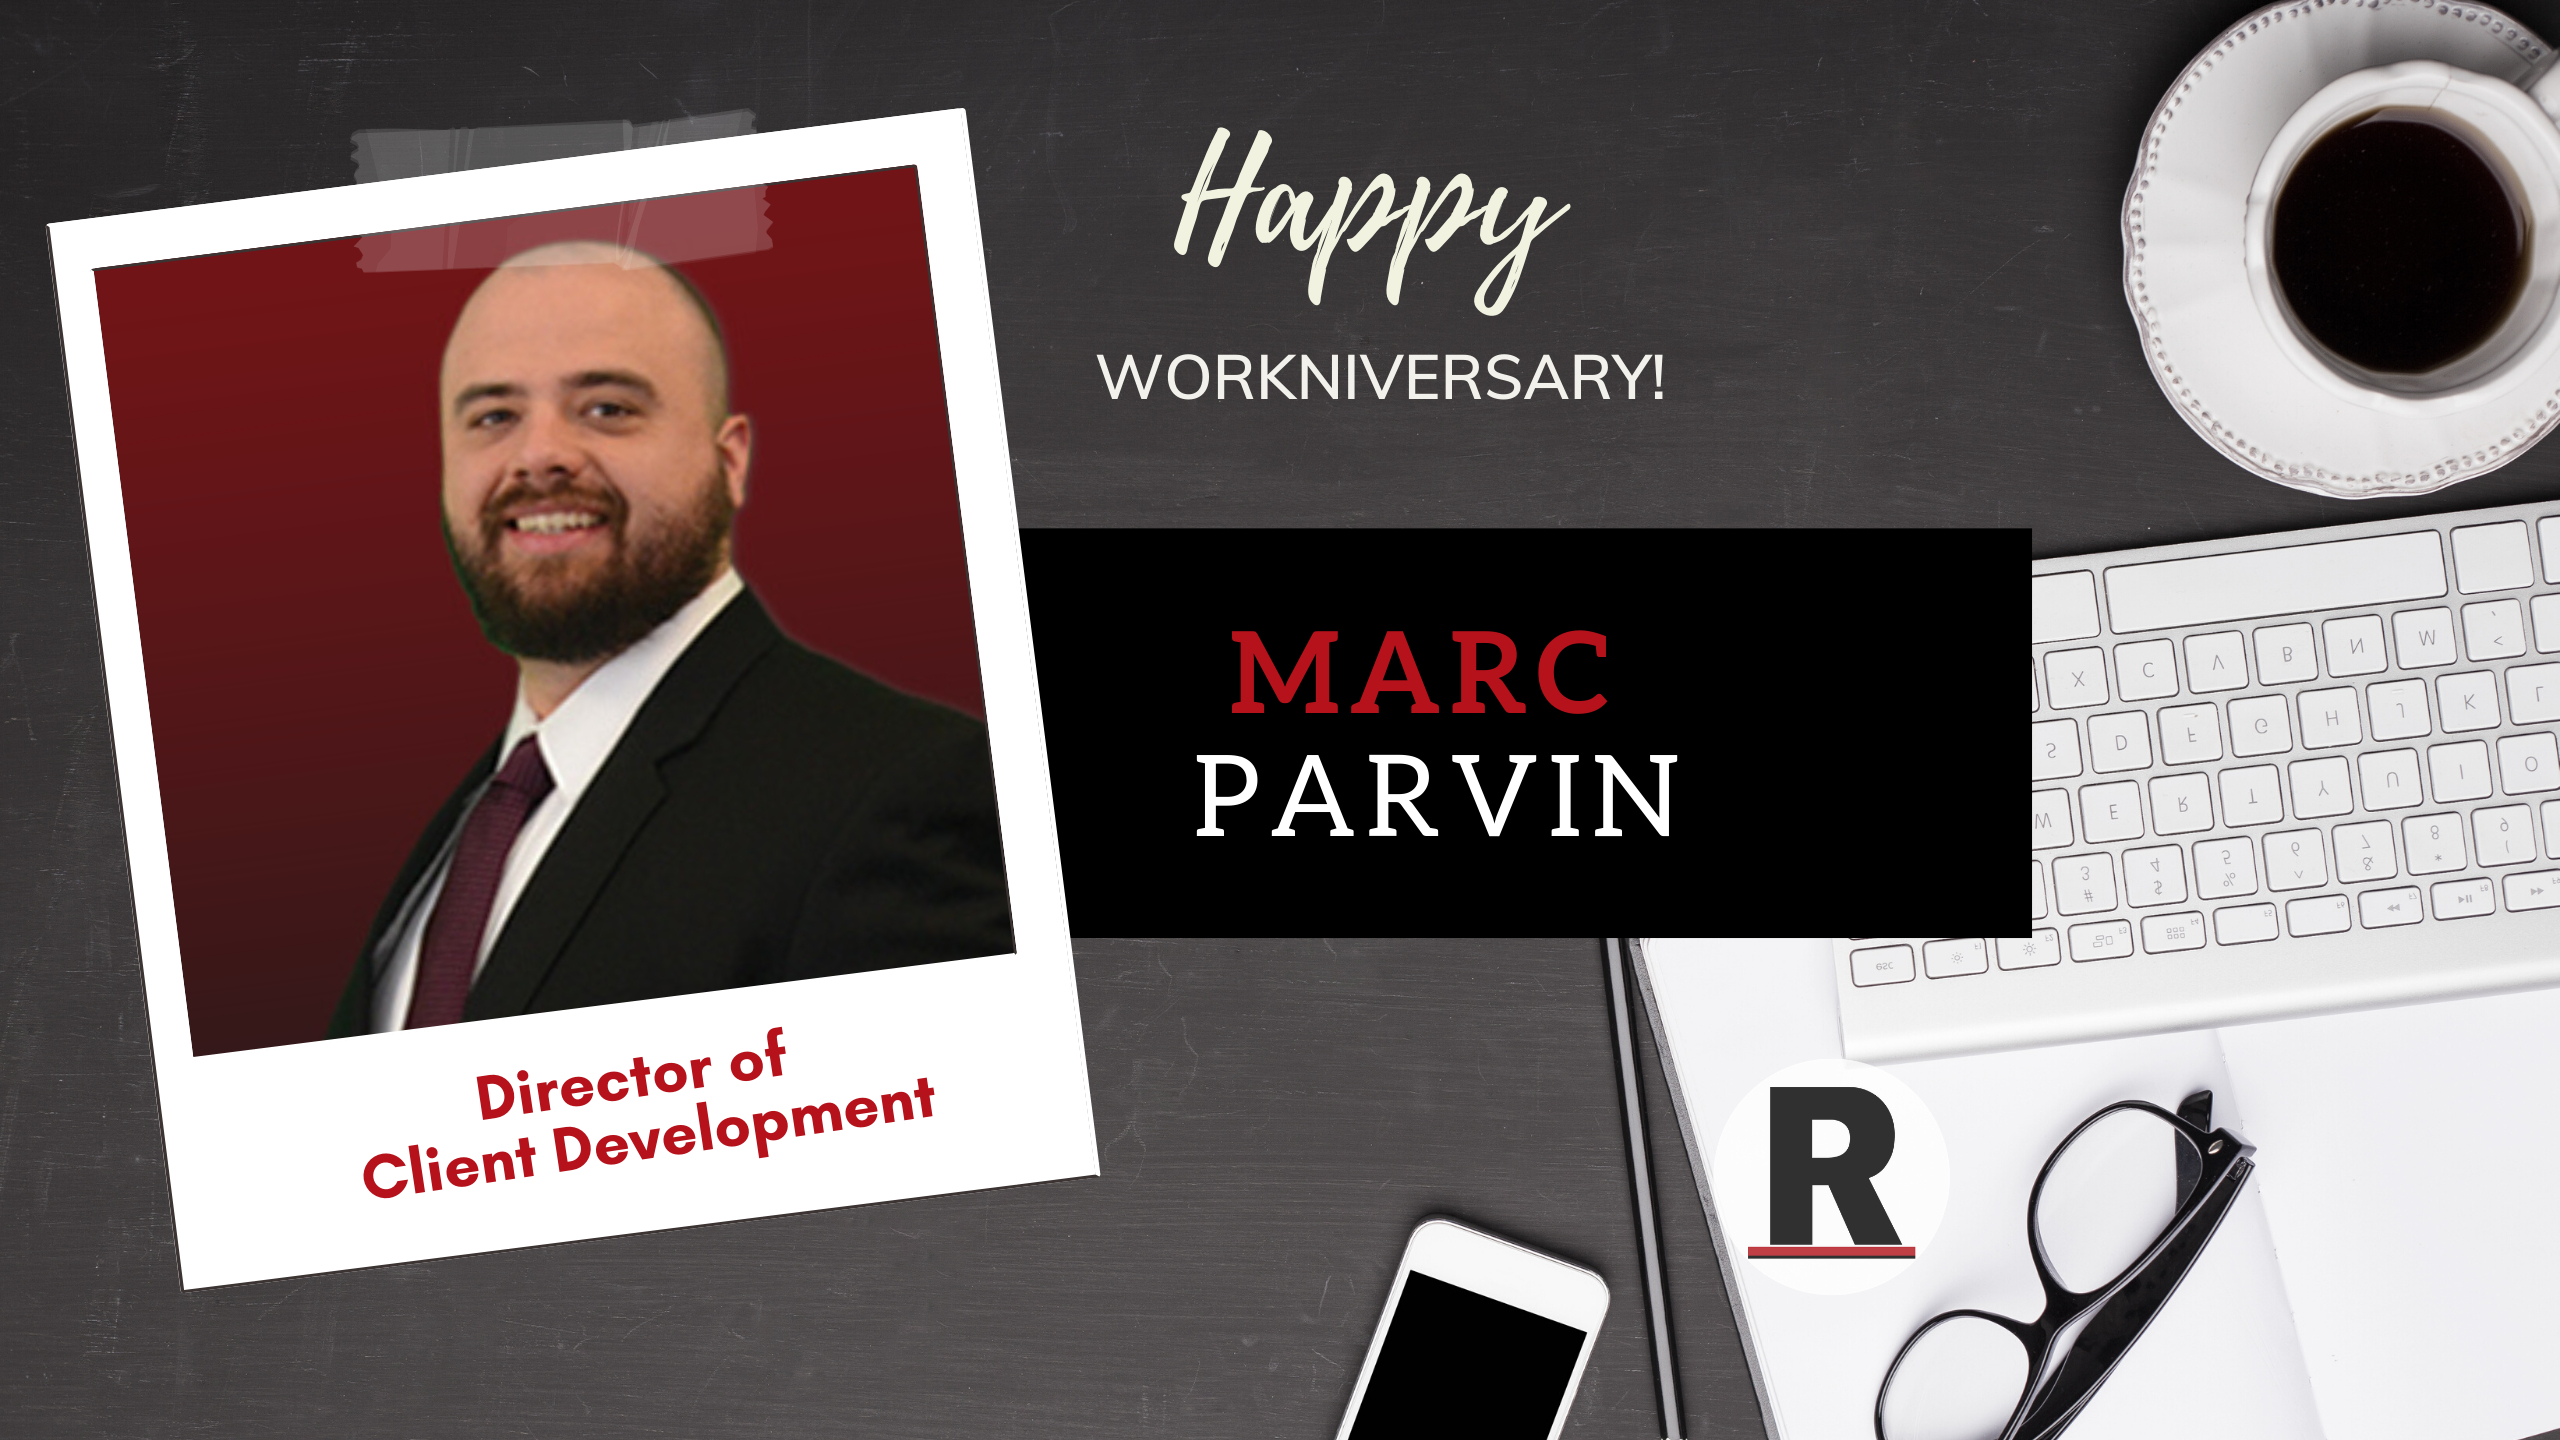 Happy Workniversary Marc Parvin!